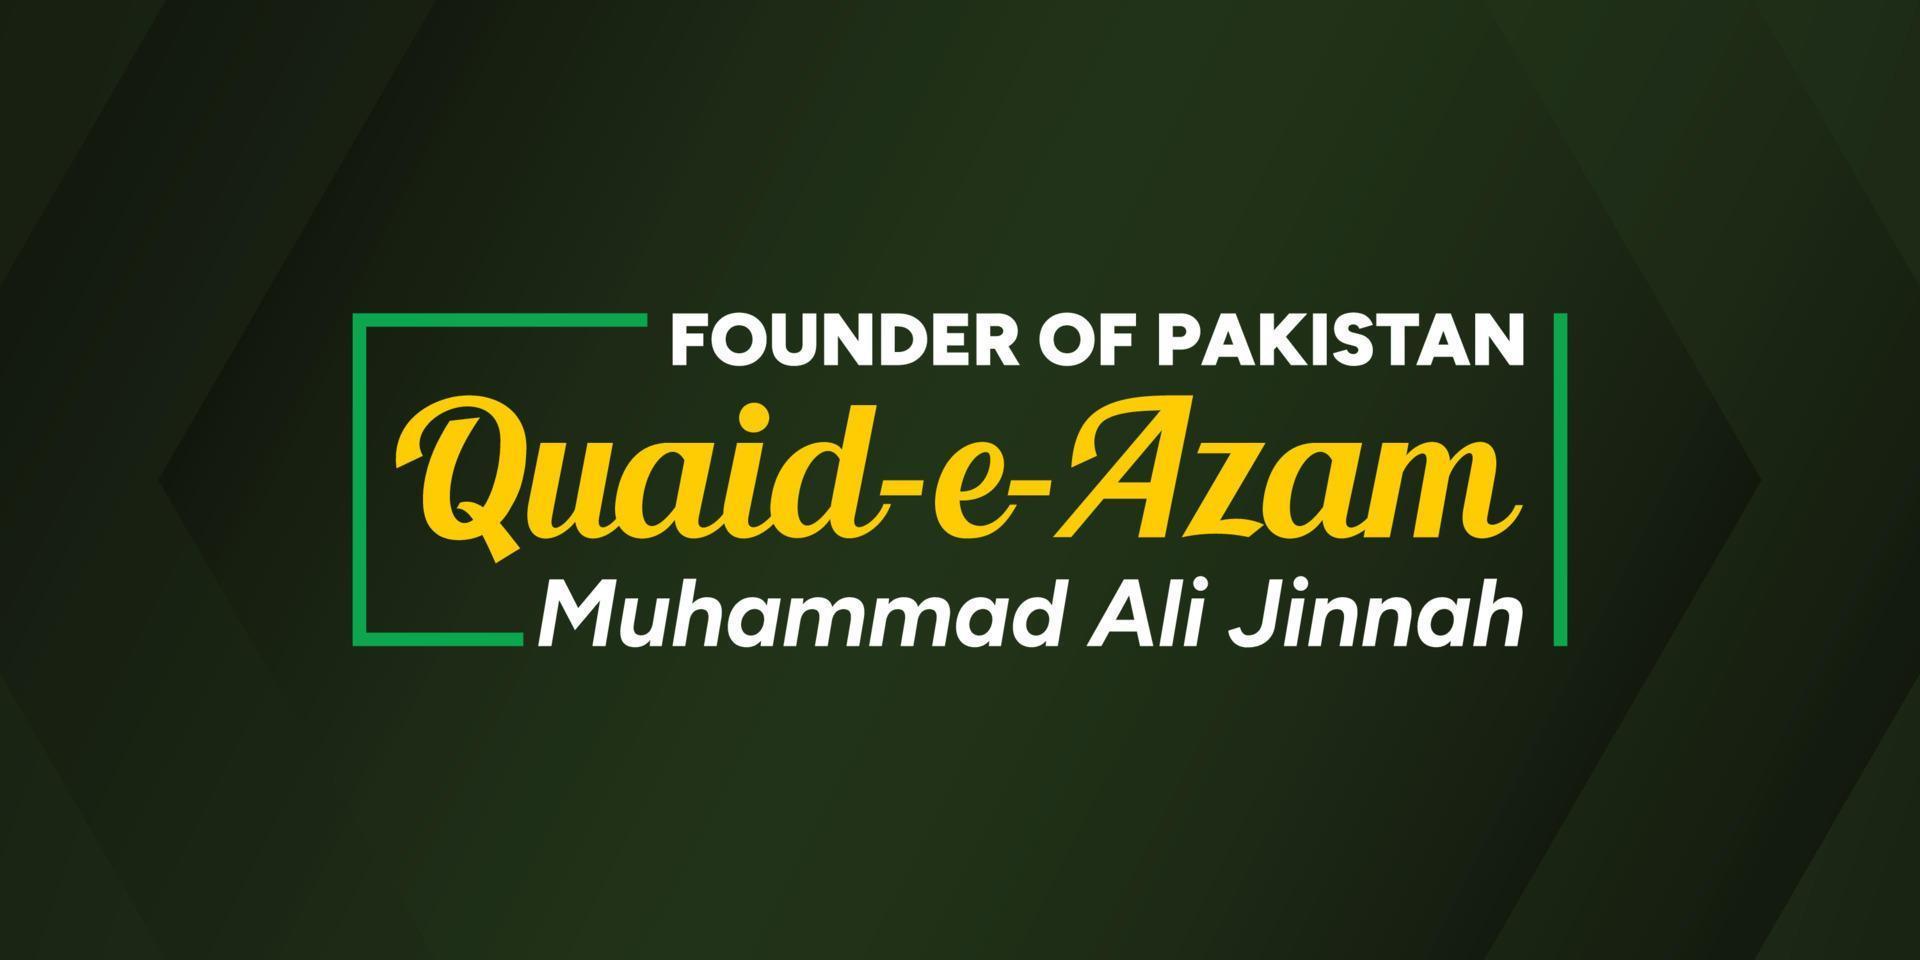 fondateur de Pakistan, quai-e-azam Mohammed Ali djinn, chef vecteur